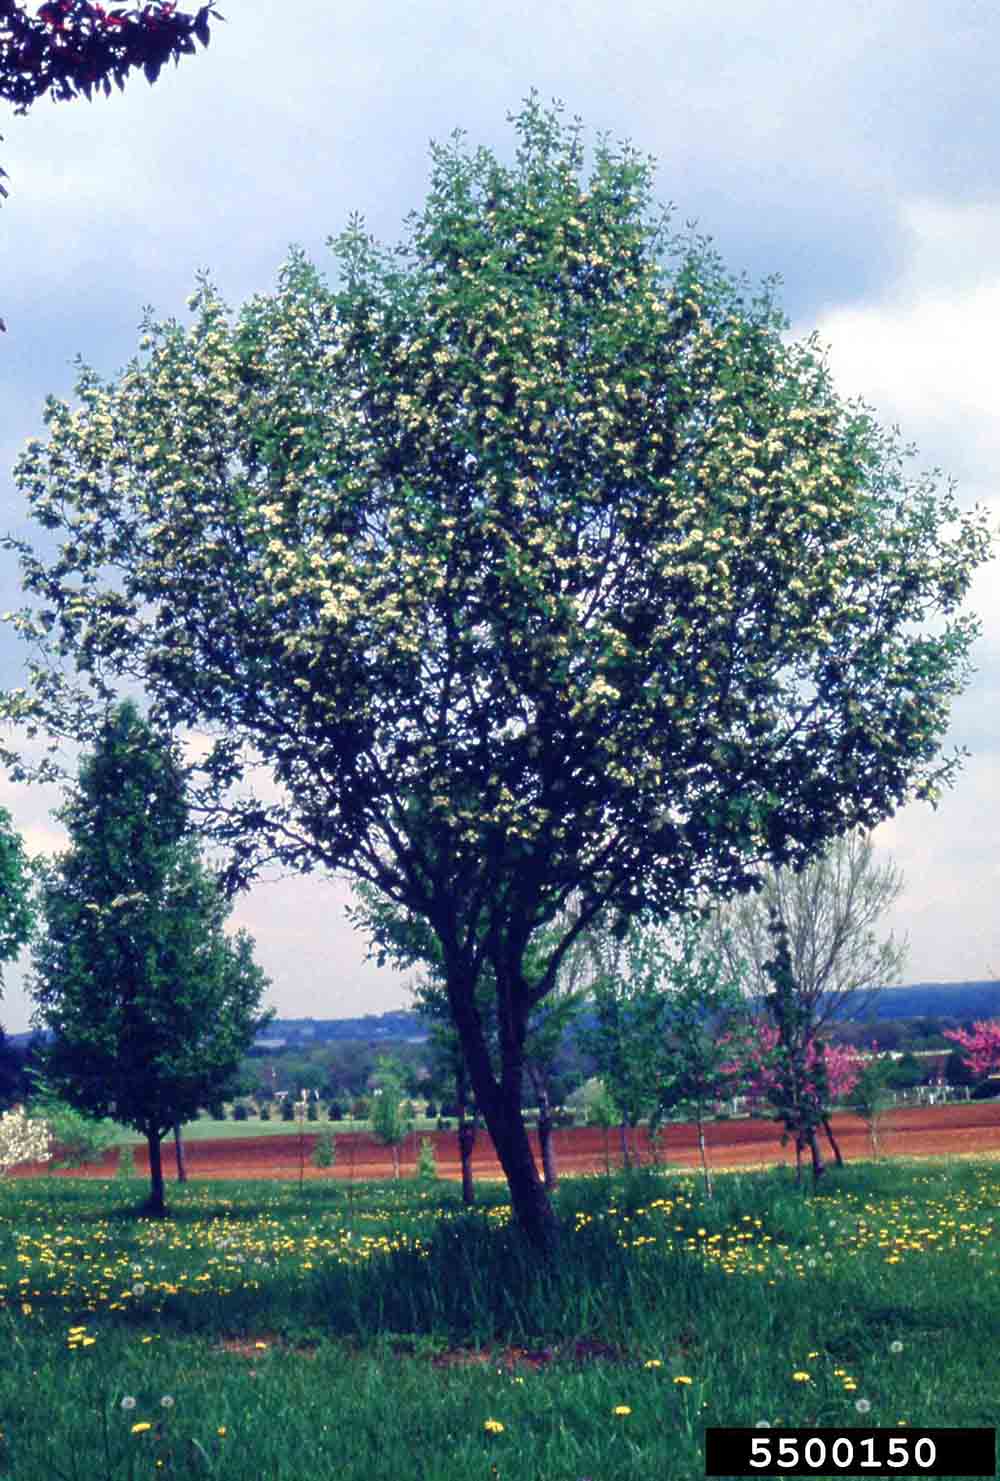 Glossy hawthorn tree in bloom